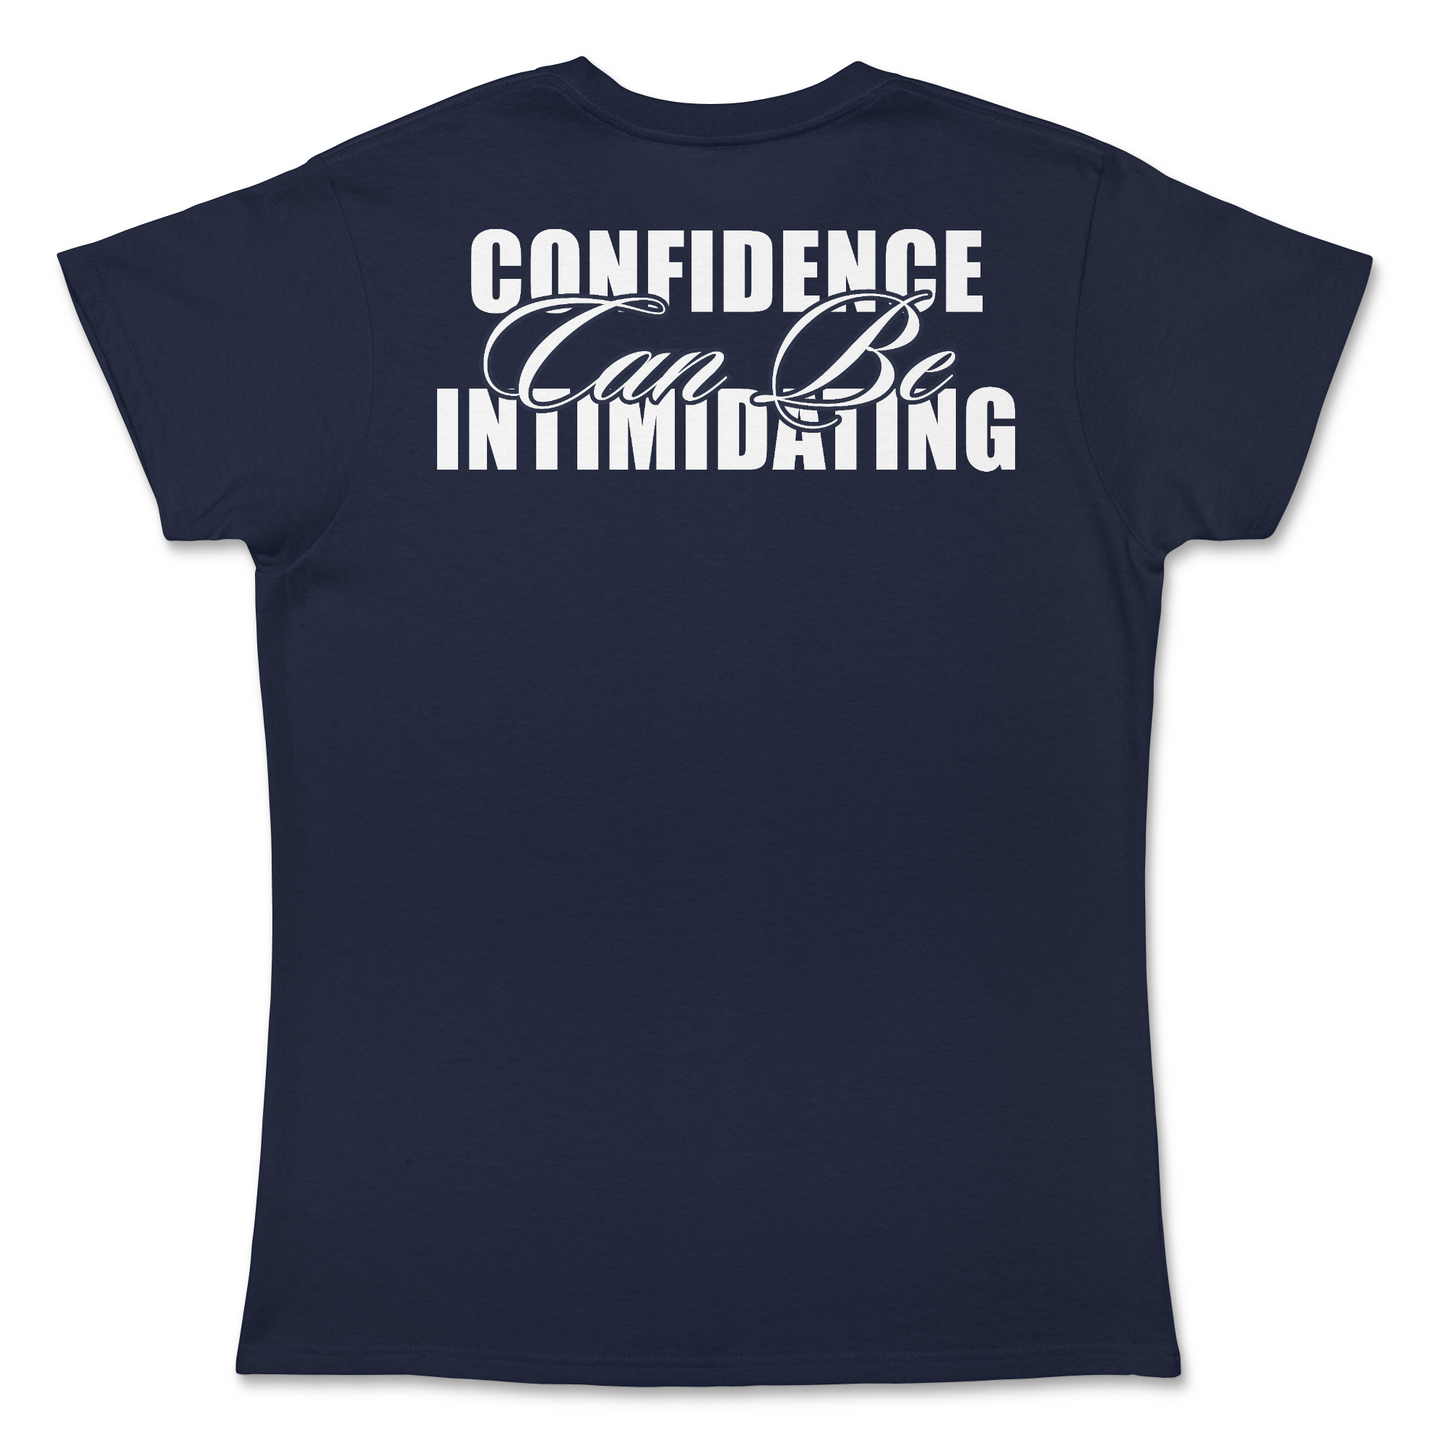 Women's "Confidence" T-Shirt